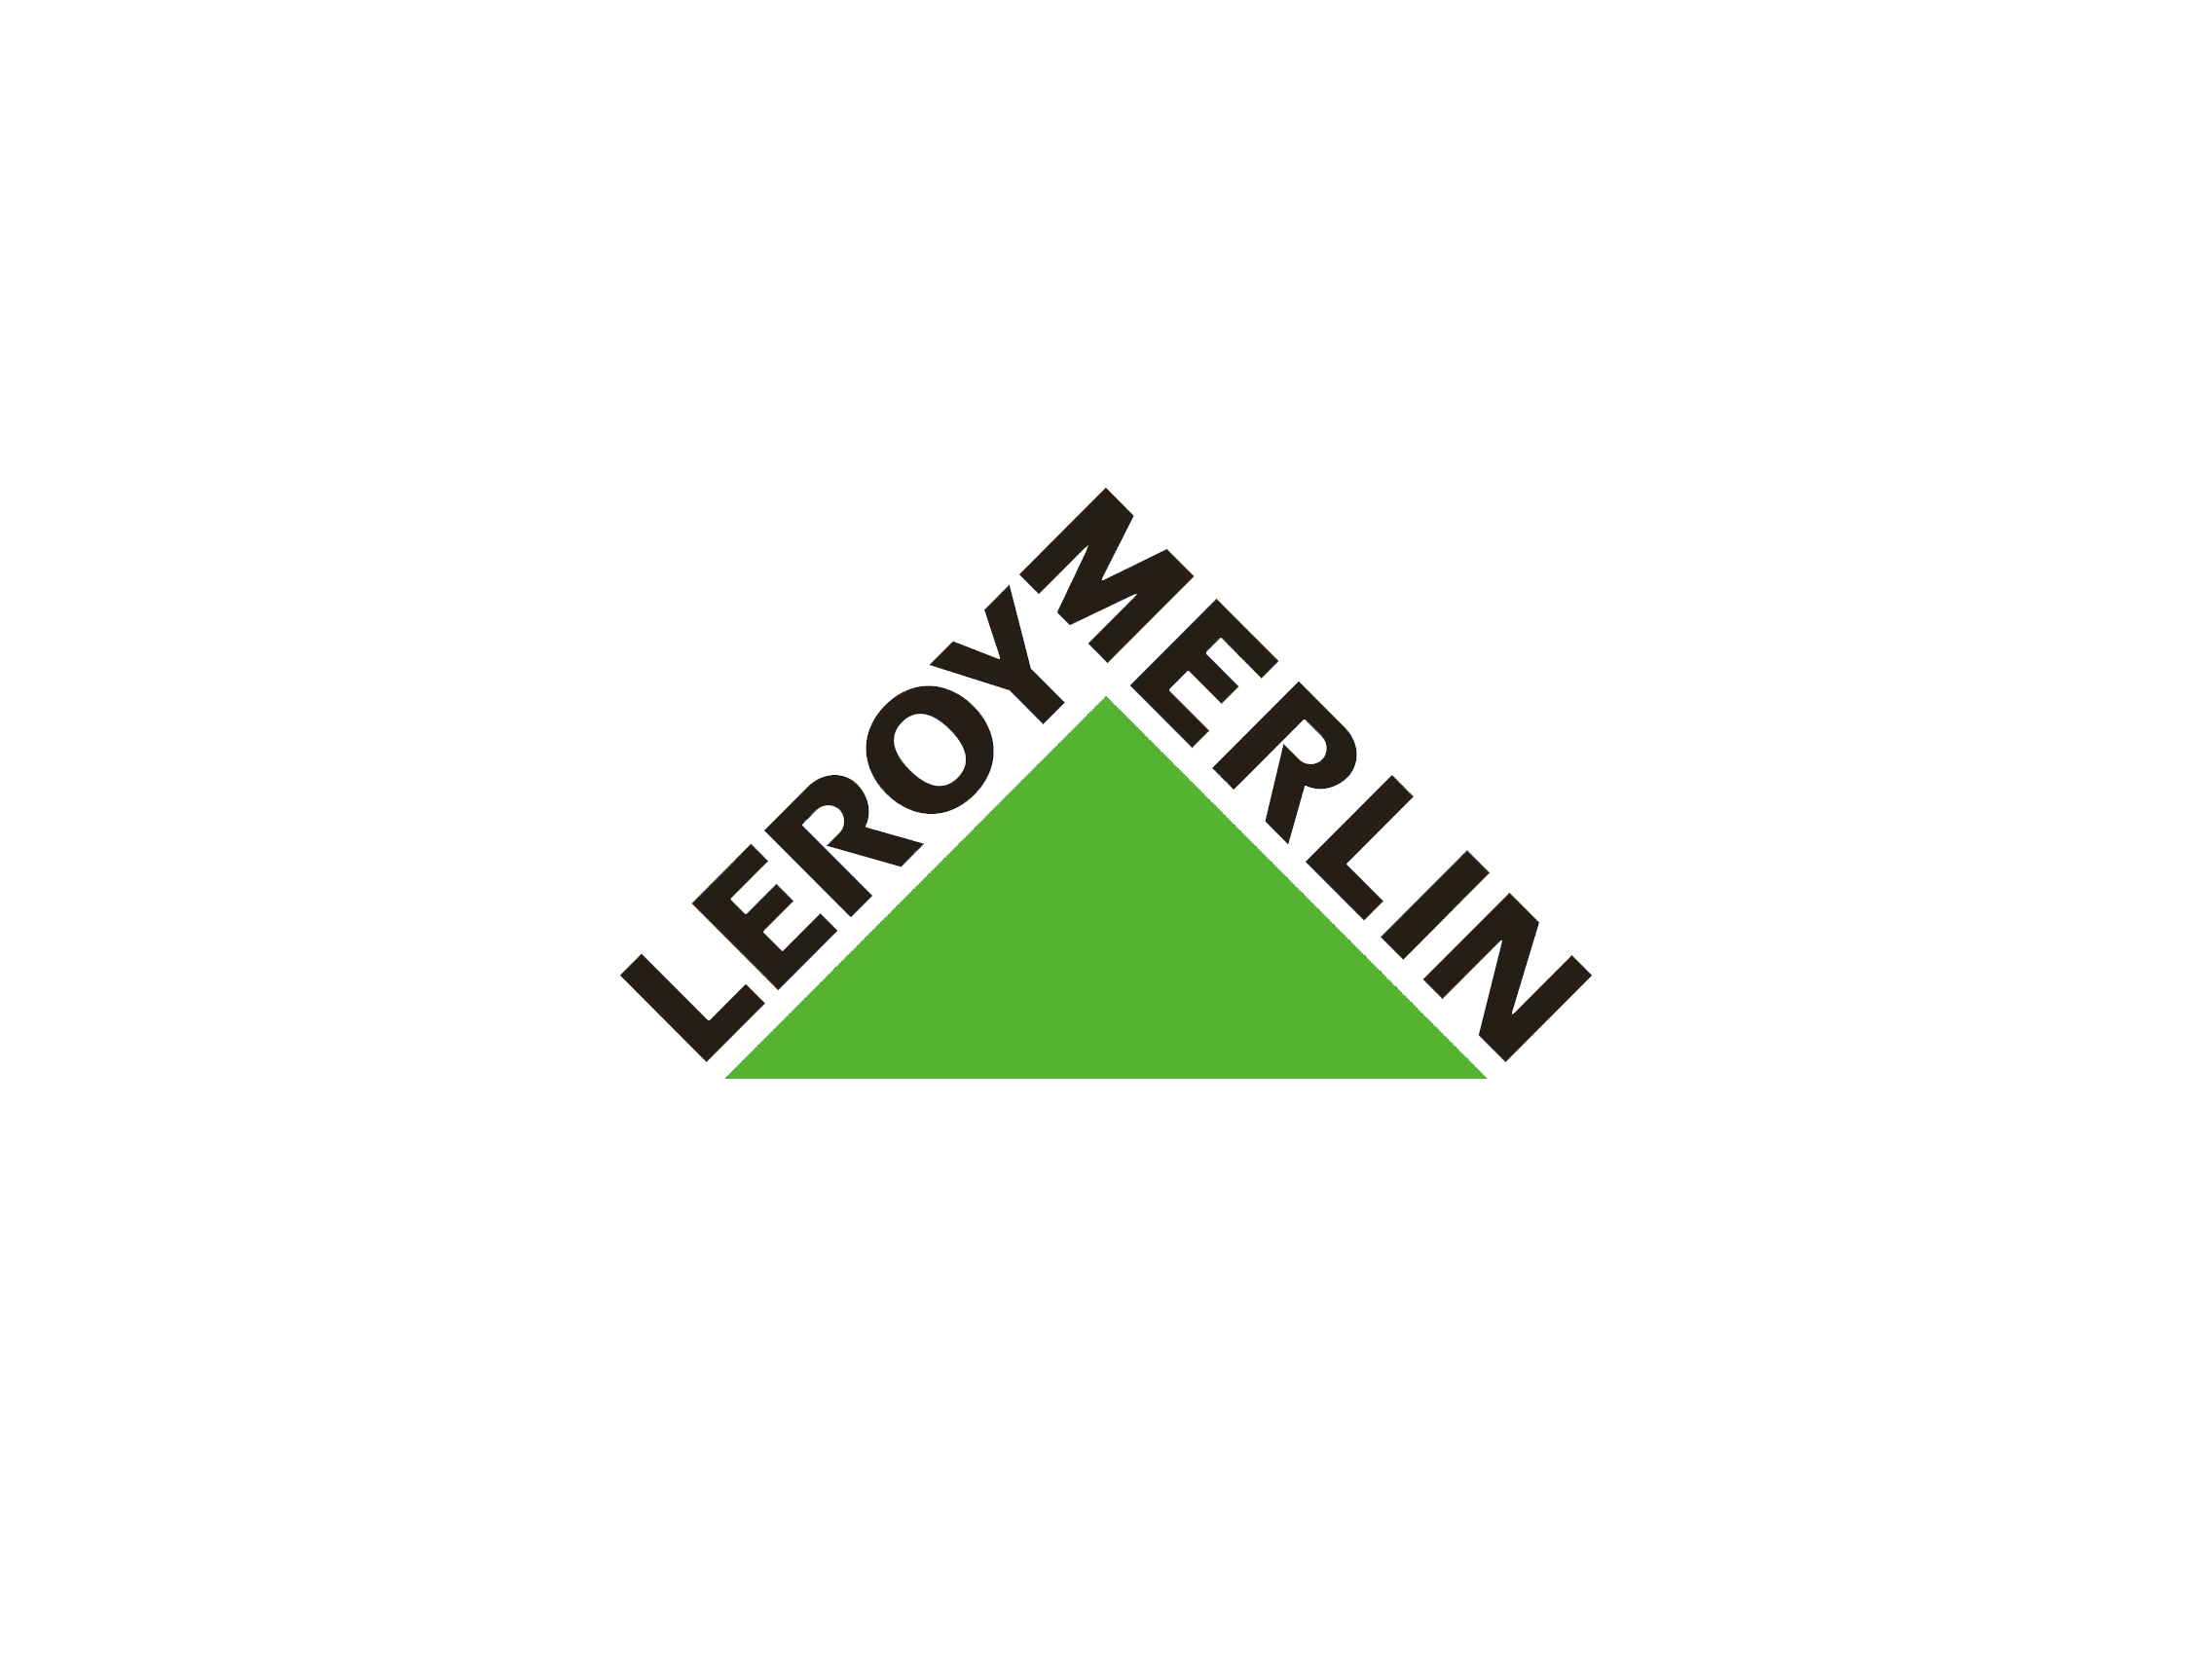 Green Triangle Logo - Leroy Merlin logo | Logok